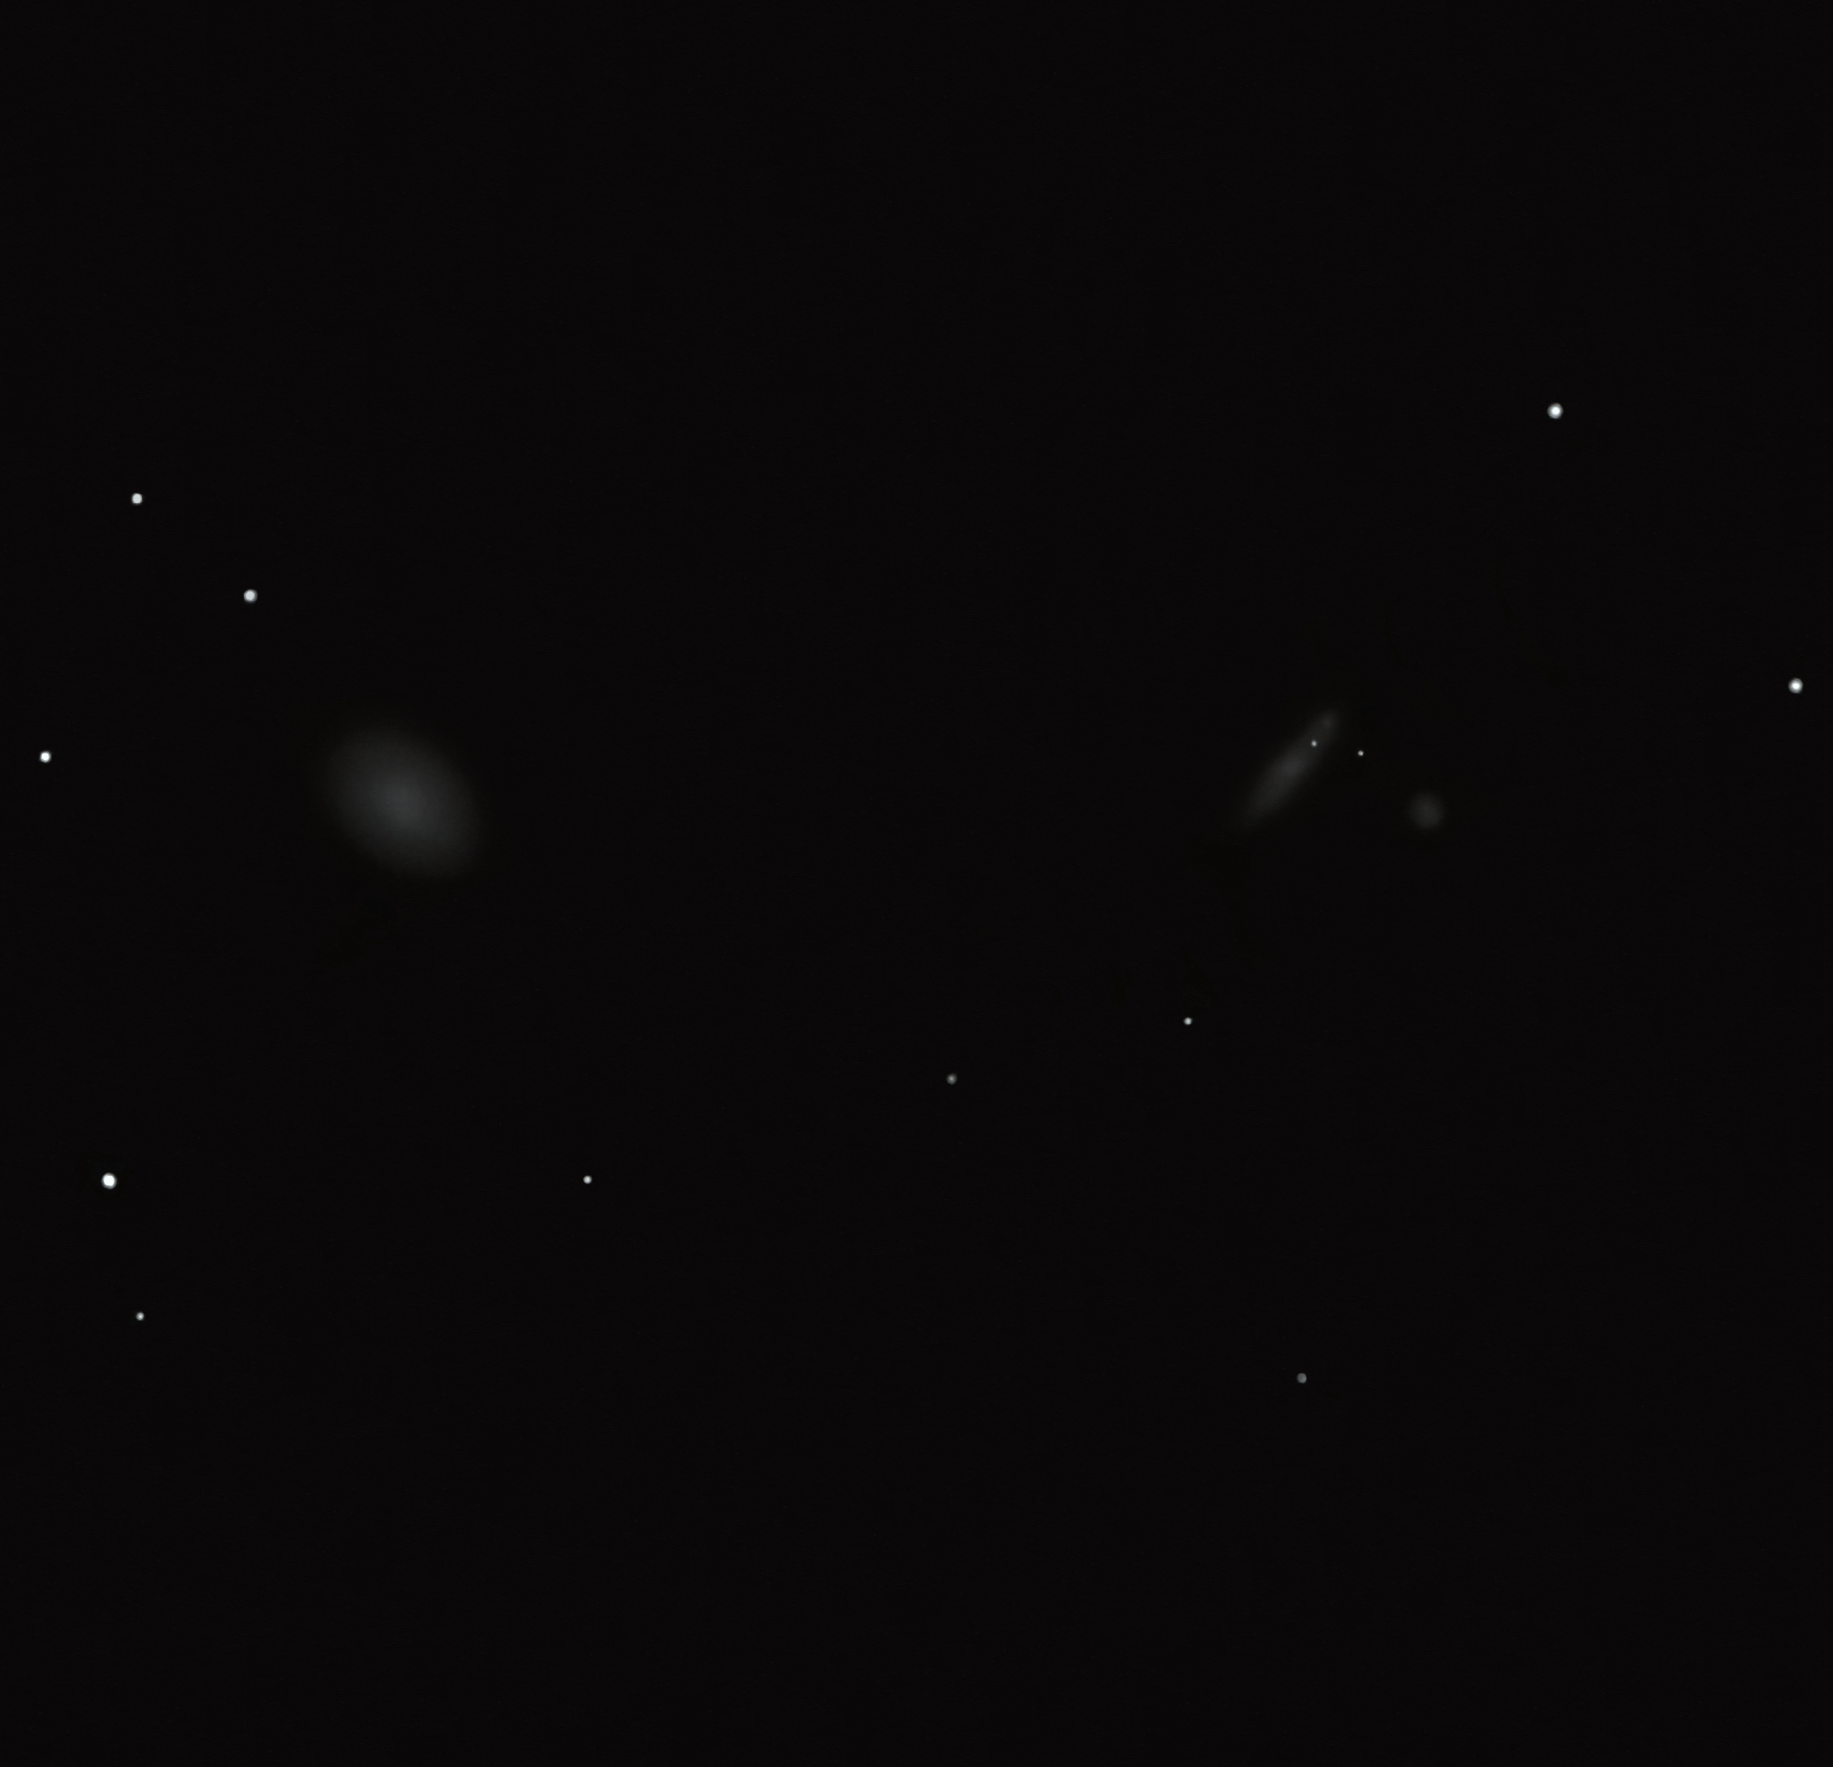 Arp 61 galaxies